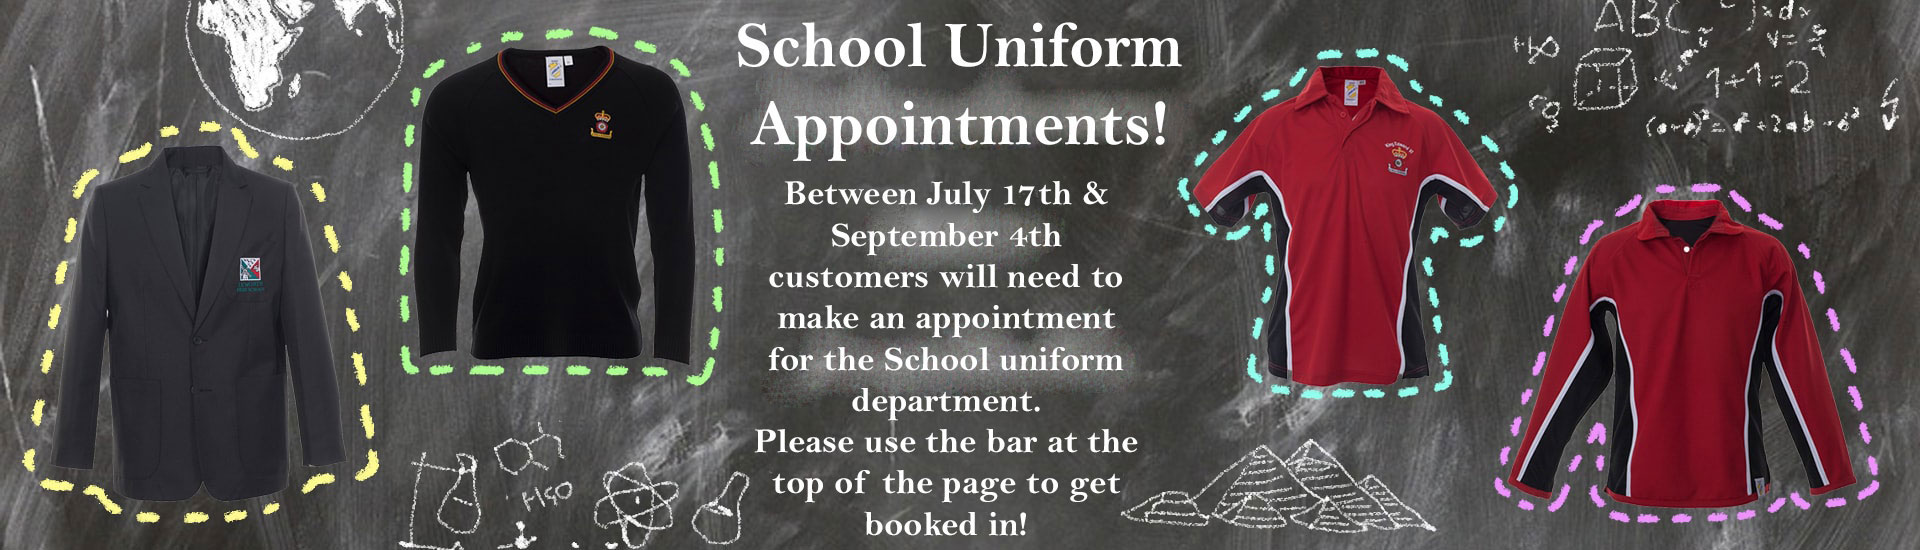 school-uniform-appointments-banner